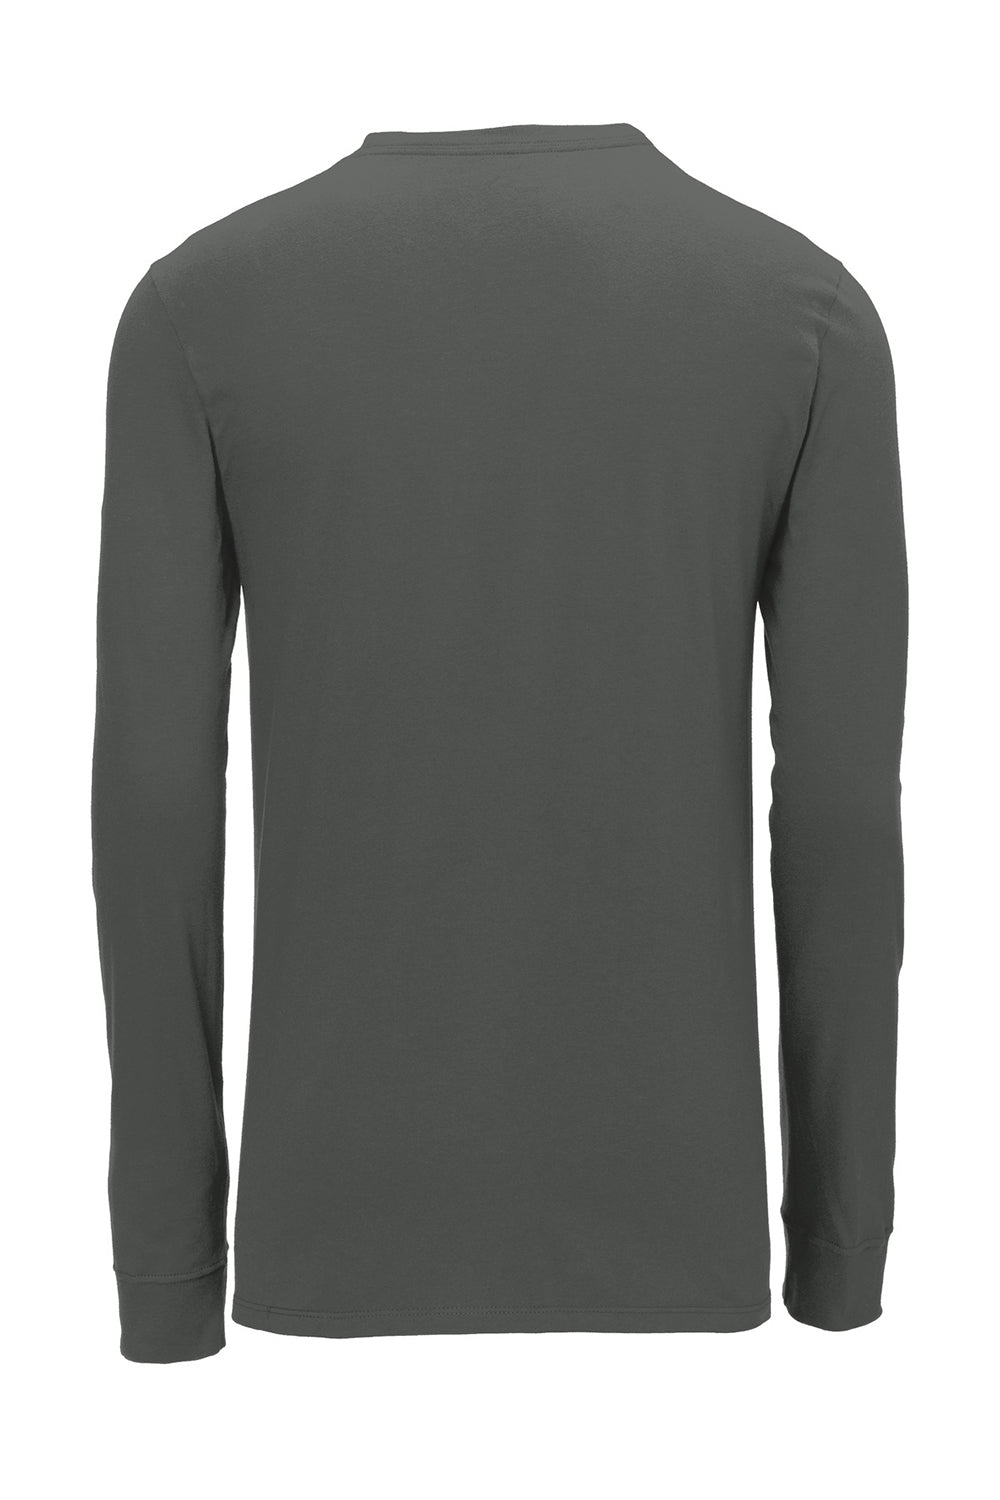 Nike NKBQ5230 Mens Dri-Fit Moisture Wicking Long Sleeve Crewneck T-Shirt Anthracite Grey Flat Back